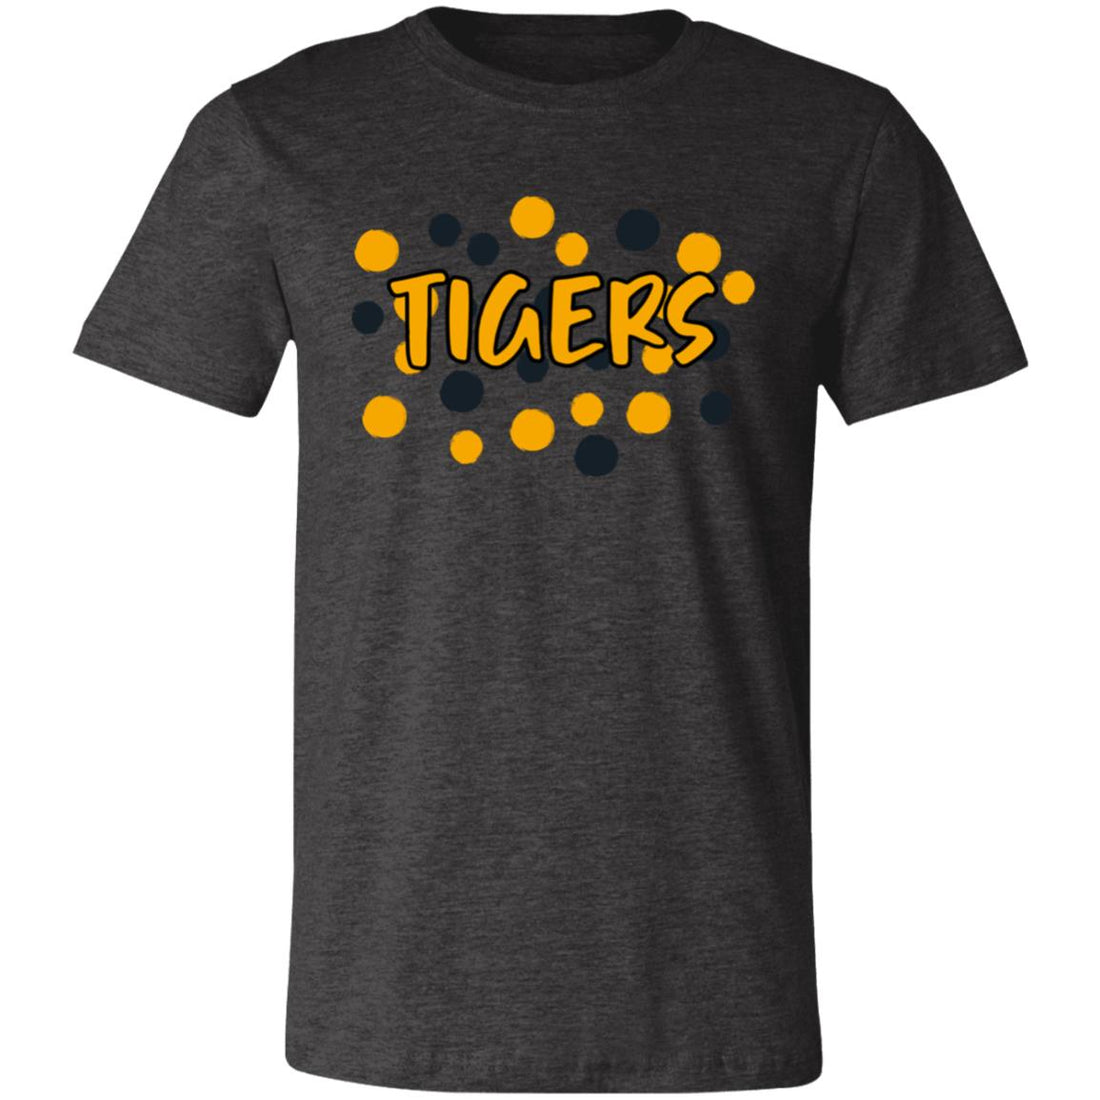 Tigers Spots Unisex Jersey Short-Sleeve T-Shirt - T-Shirts - Positively Sassy - Tigers Spots Unisex Jersey Short-Sleeve T-Shirt